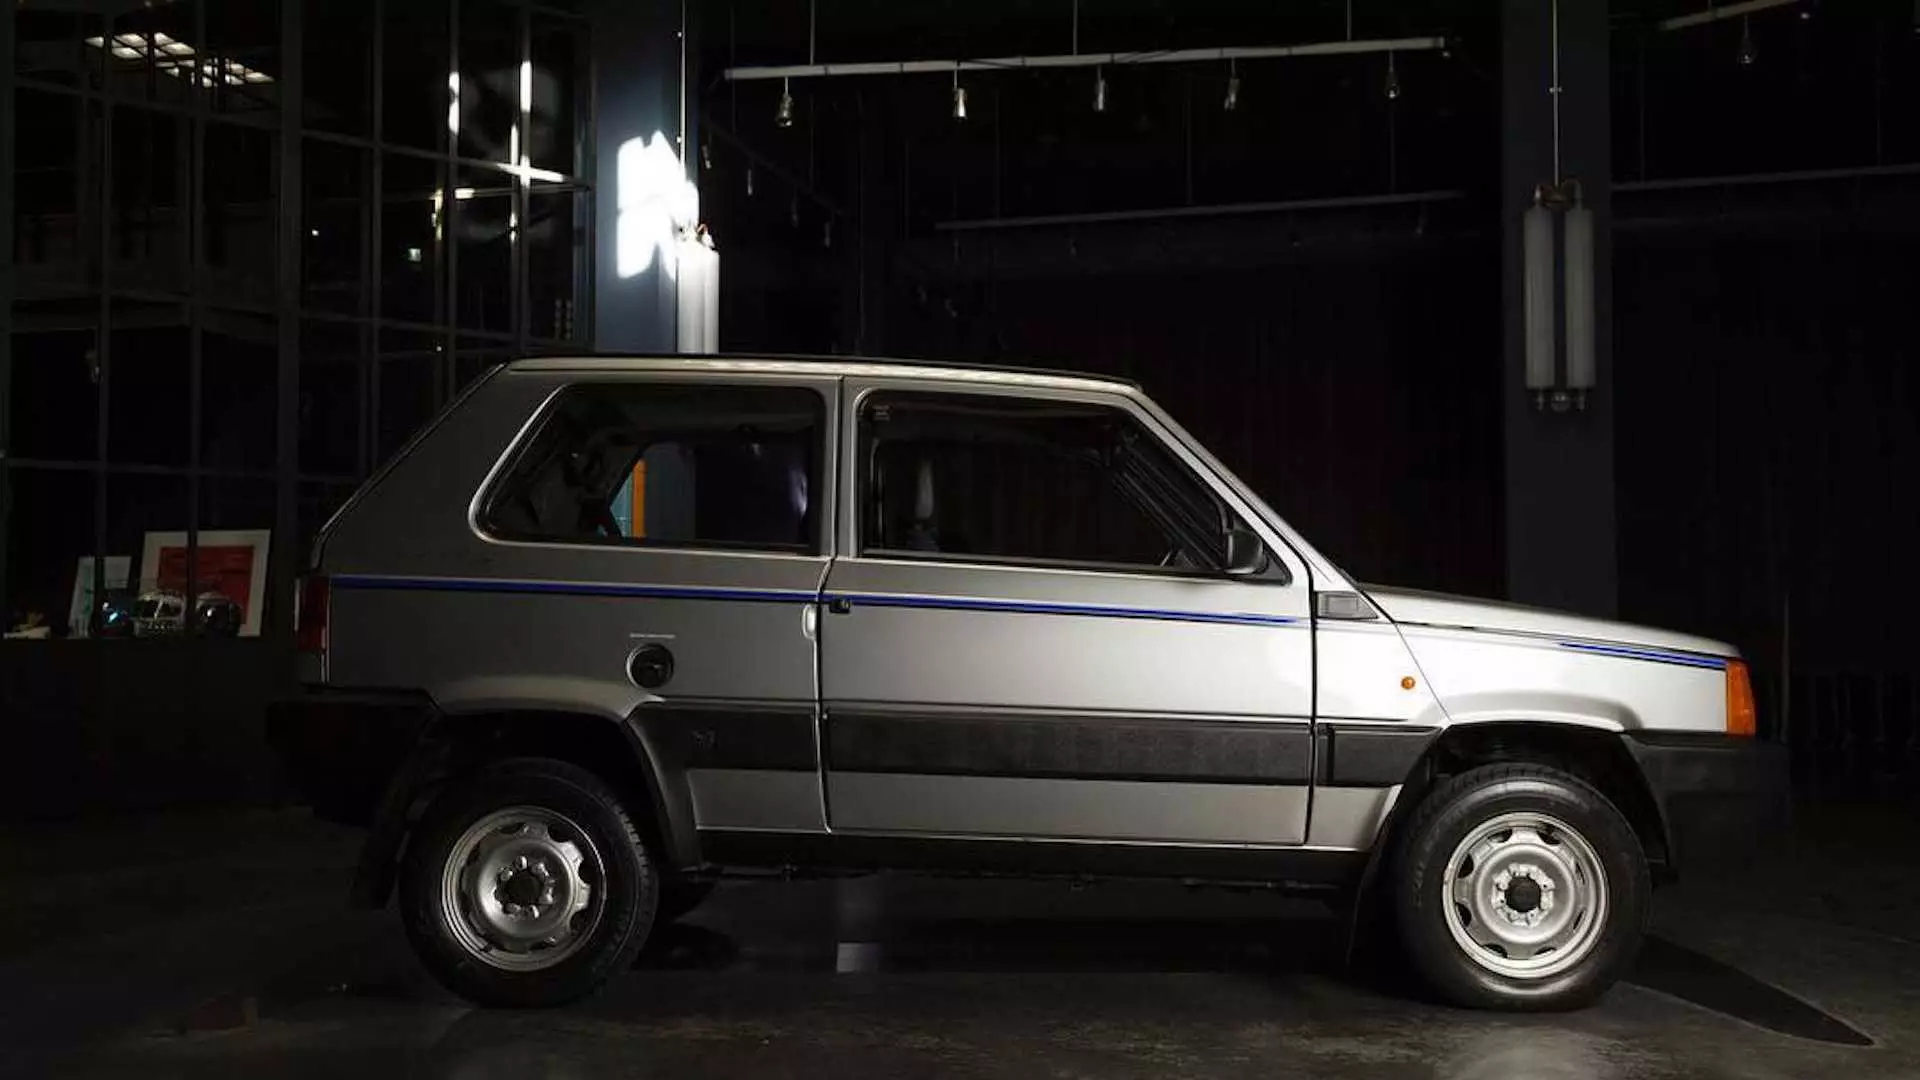 Fiat Panda 4x4 от Джанни "L'Avocato" Аньелли, восстановленный таможней Garage Italia.